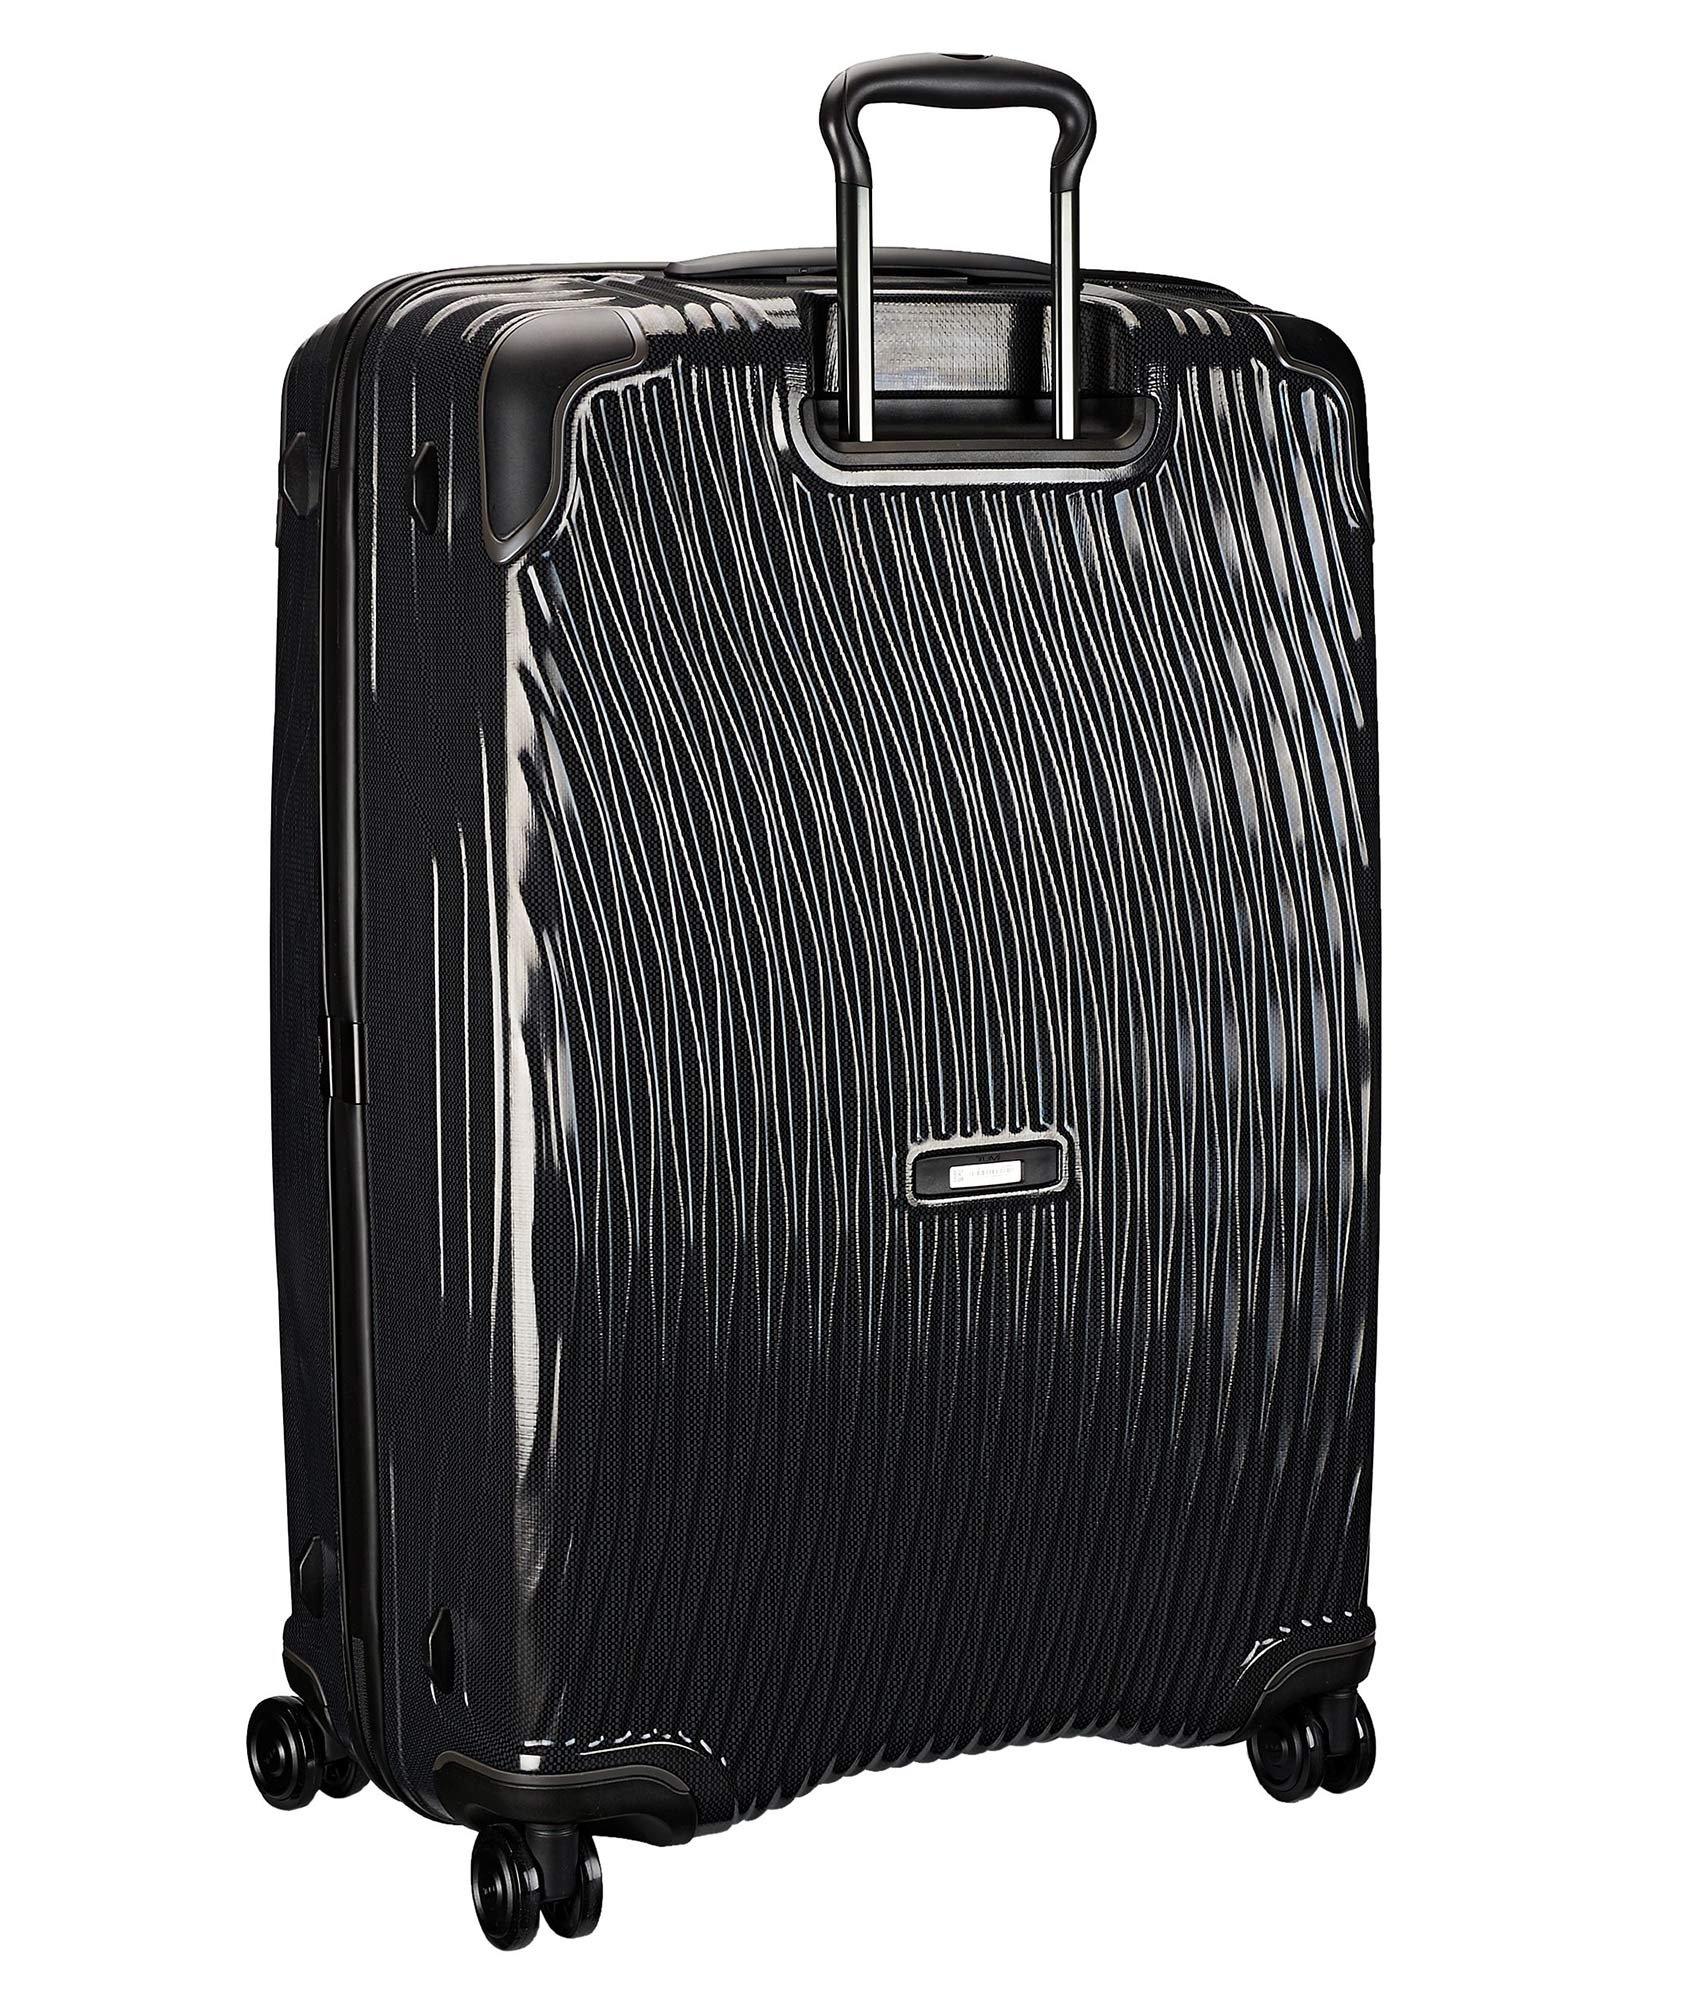 Worldwide Trip Suitcase image 1